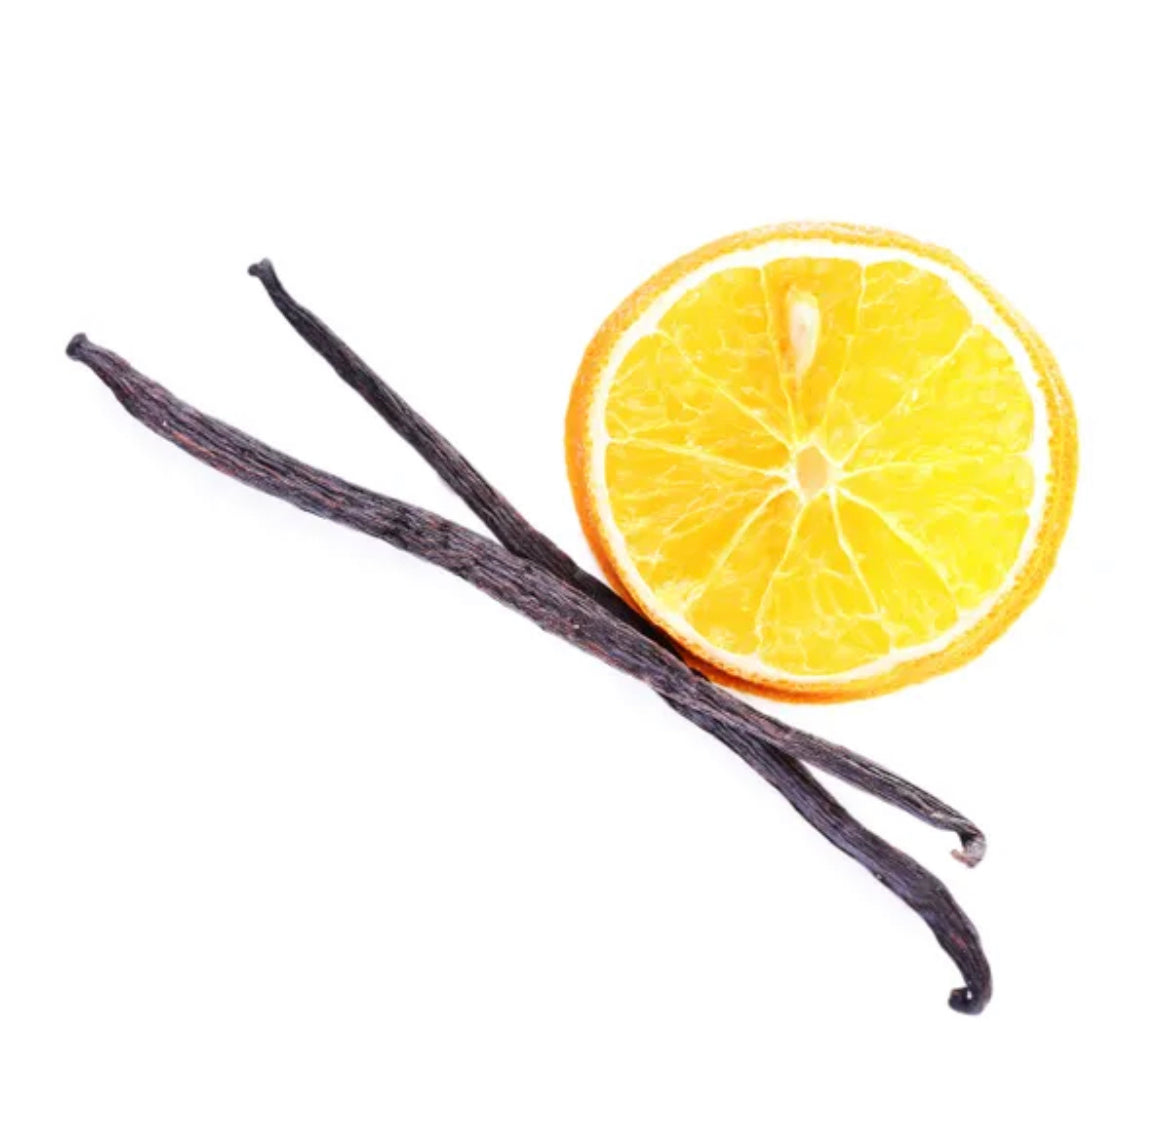 Cara-Cara Orange/Vanilla White Balsamic Vinegar